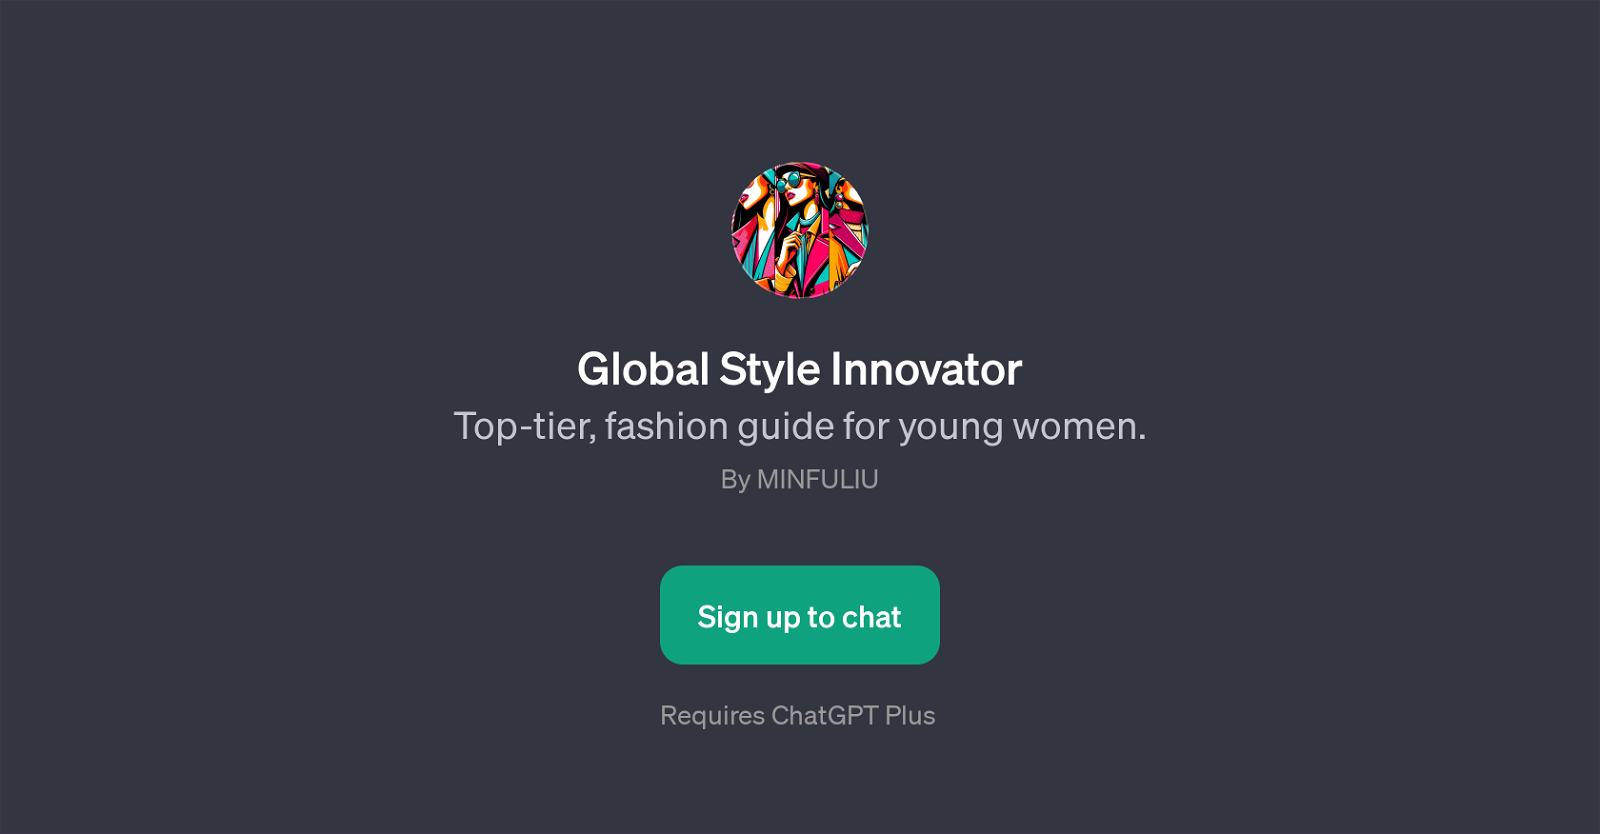 Global Style Innovator website